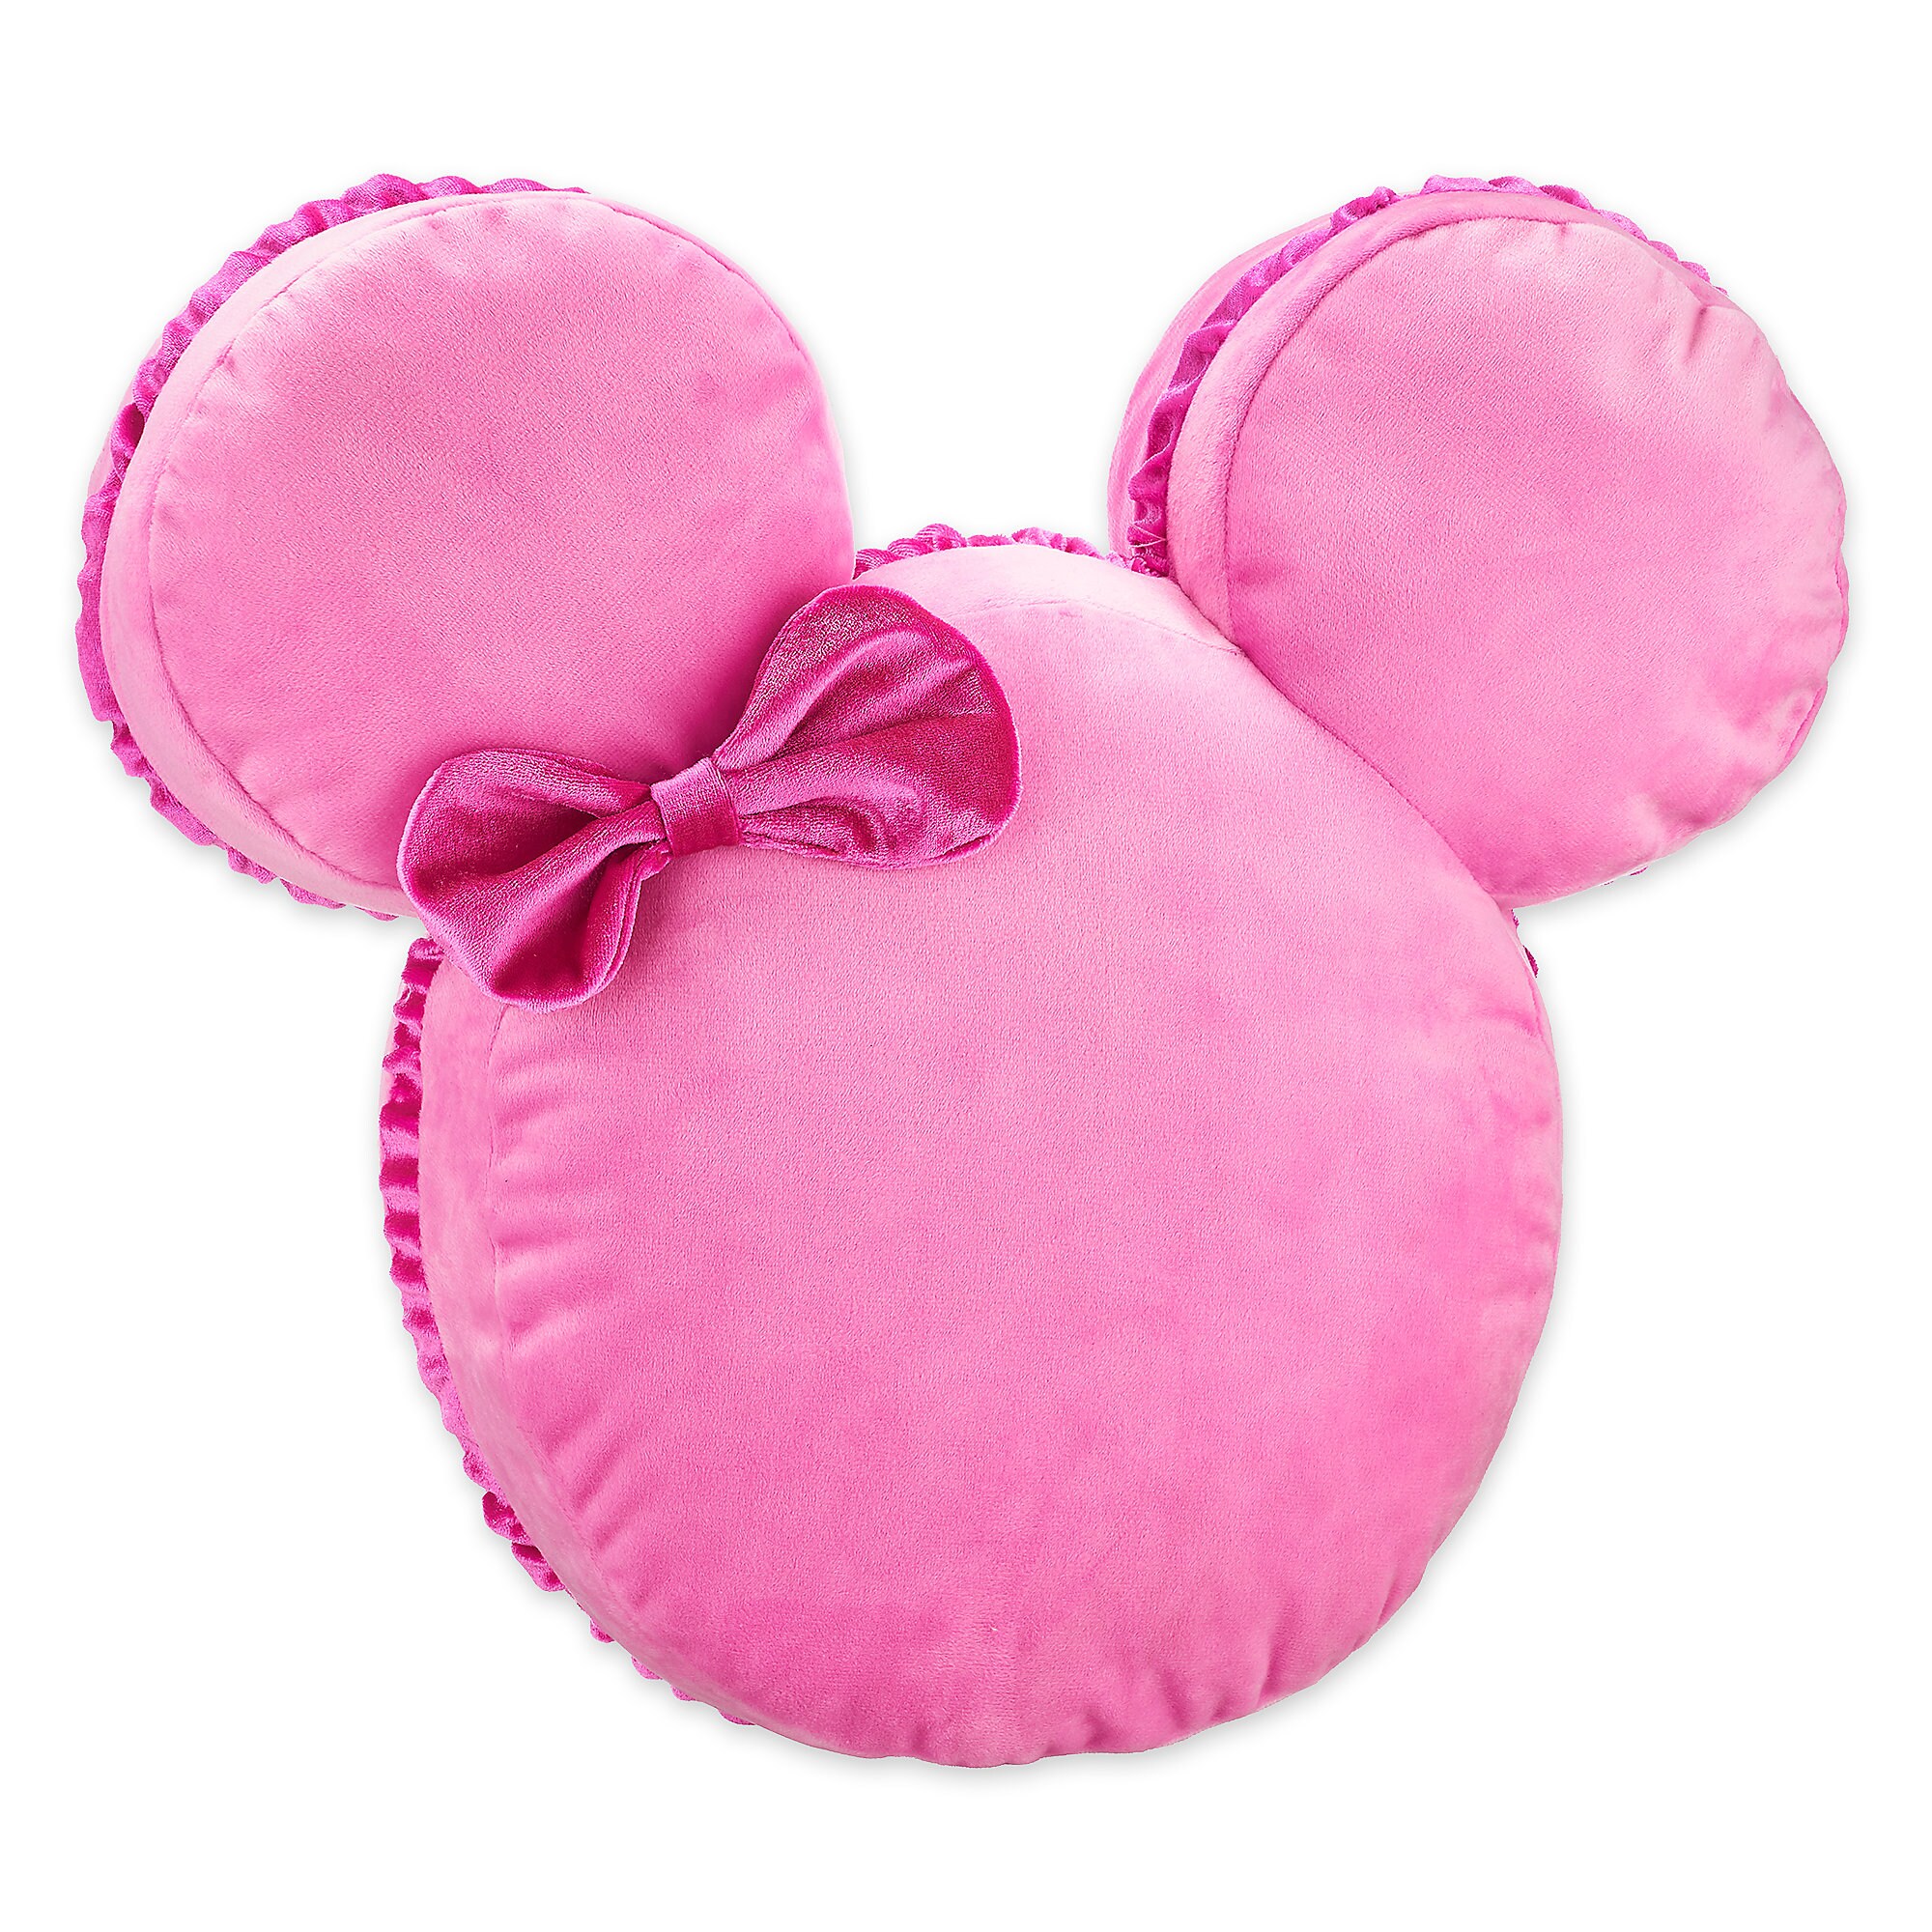 Minnie Mouse Macaron Plush - Scented - Medium - 15'' H